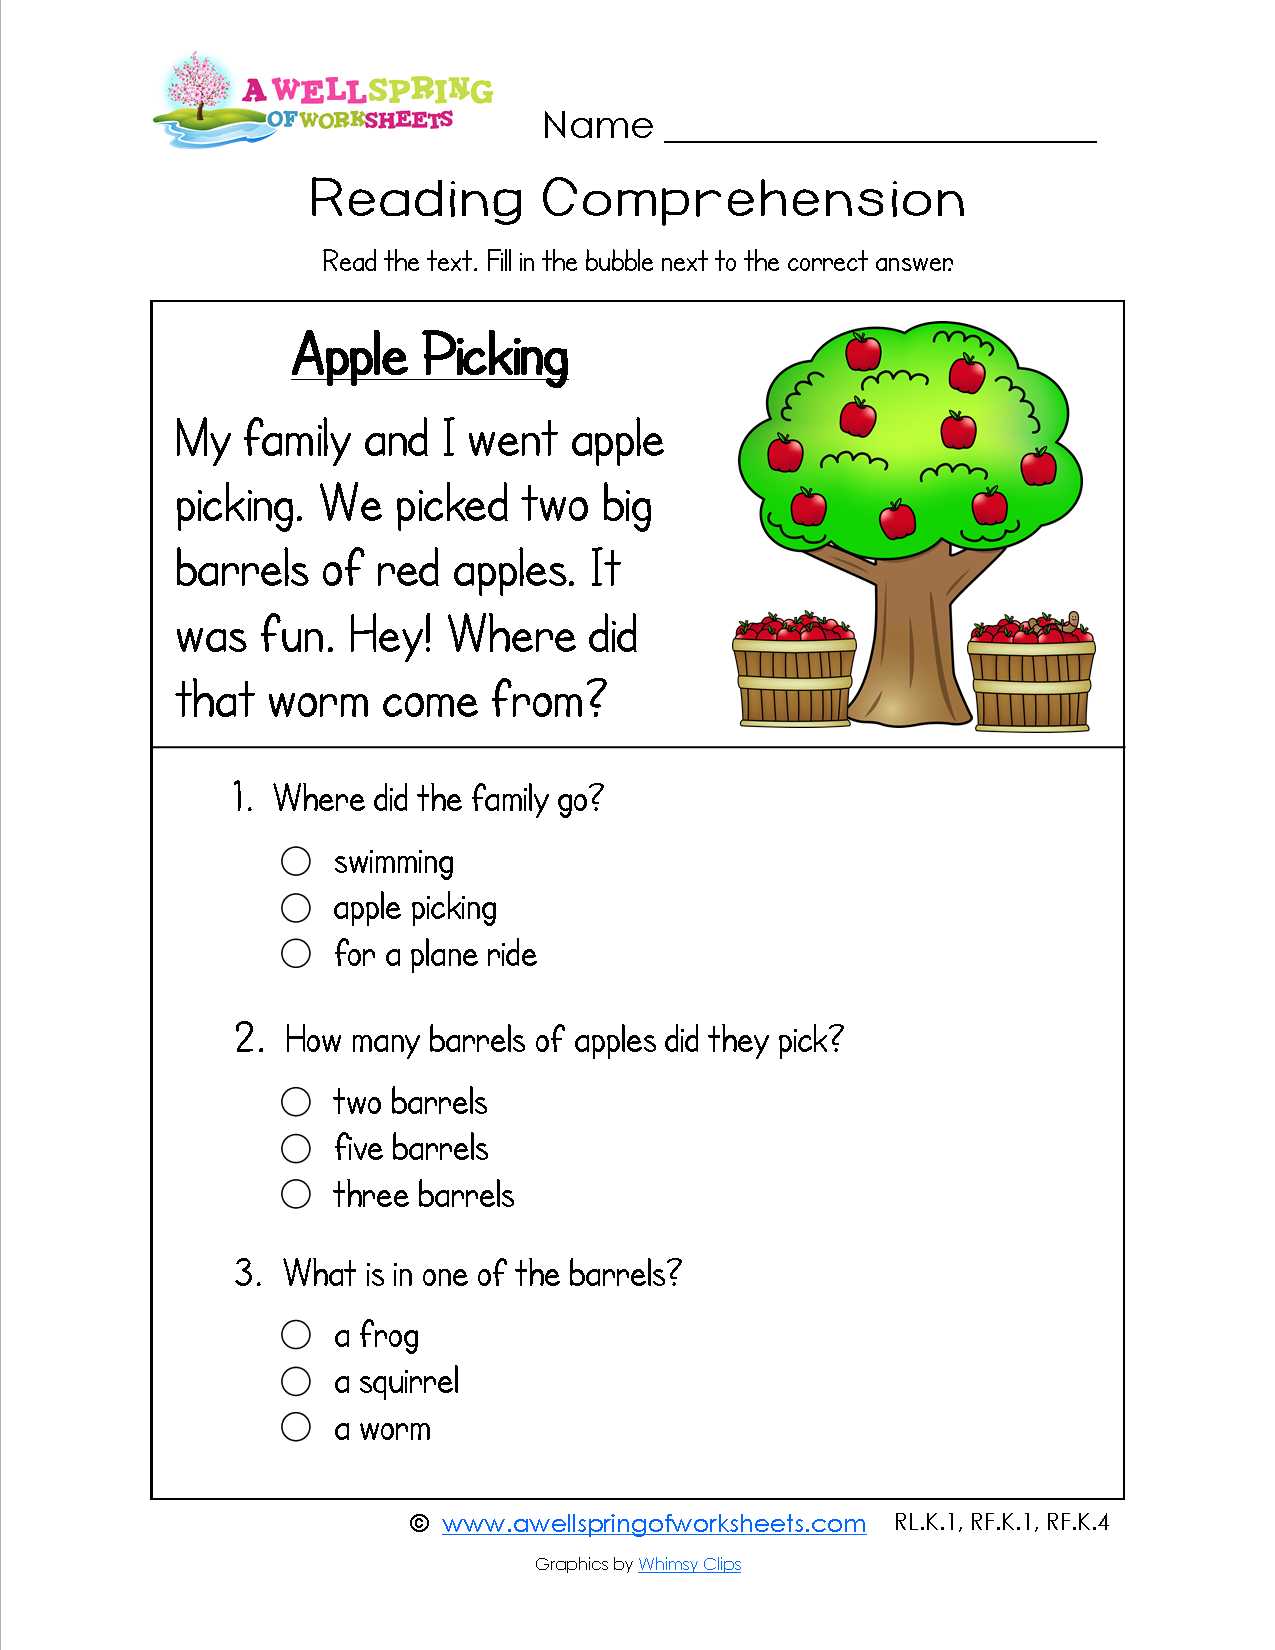 Free Reading Comprehension Worksheets for 3rd Grade and Kindergarten Grade 1 Reading Passages Descargardropbox Kindergarten